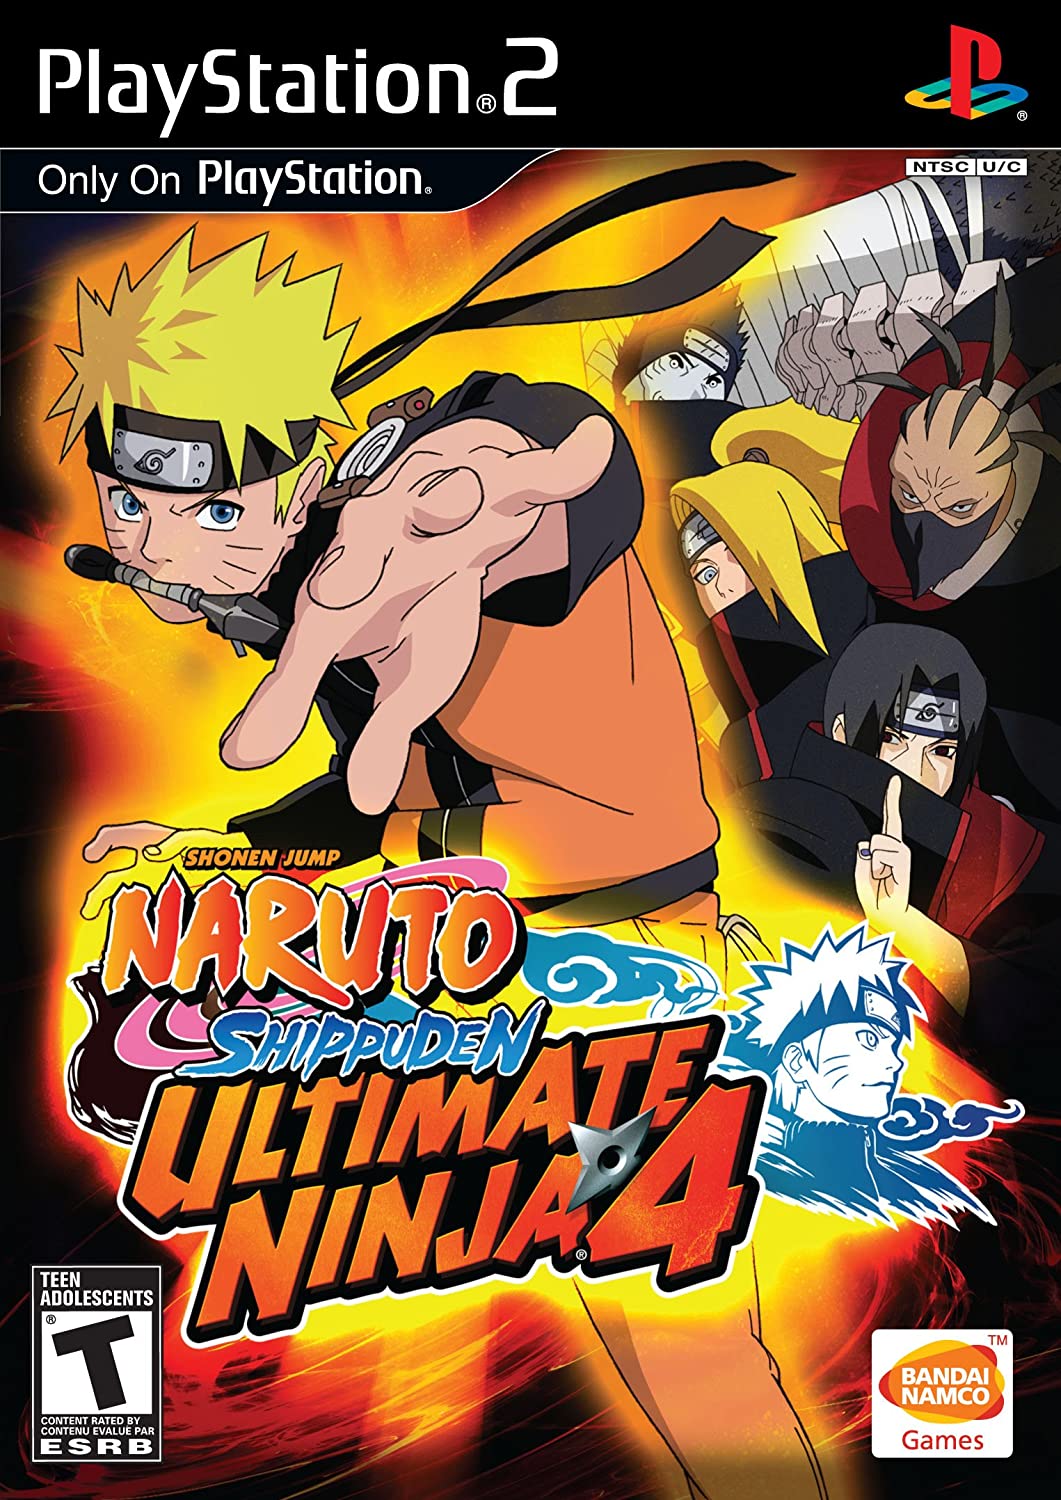 Naruto Shippuden: Ultimate Ninja 4 player count stats